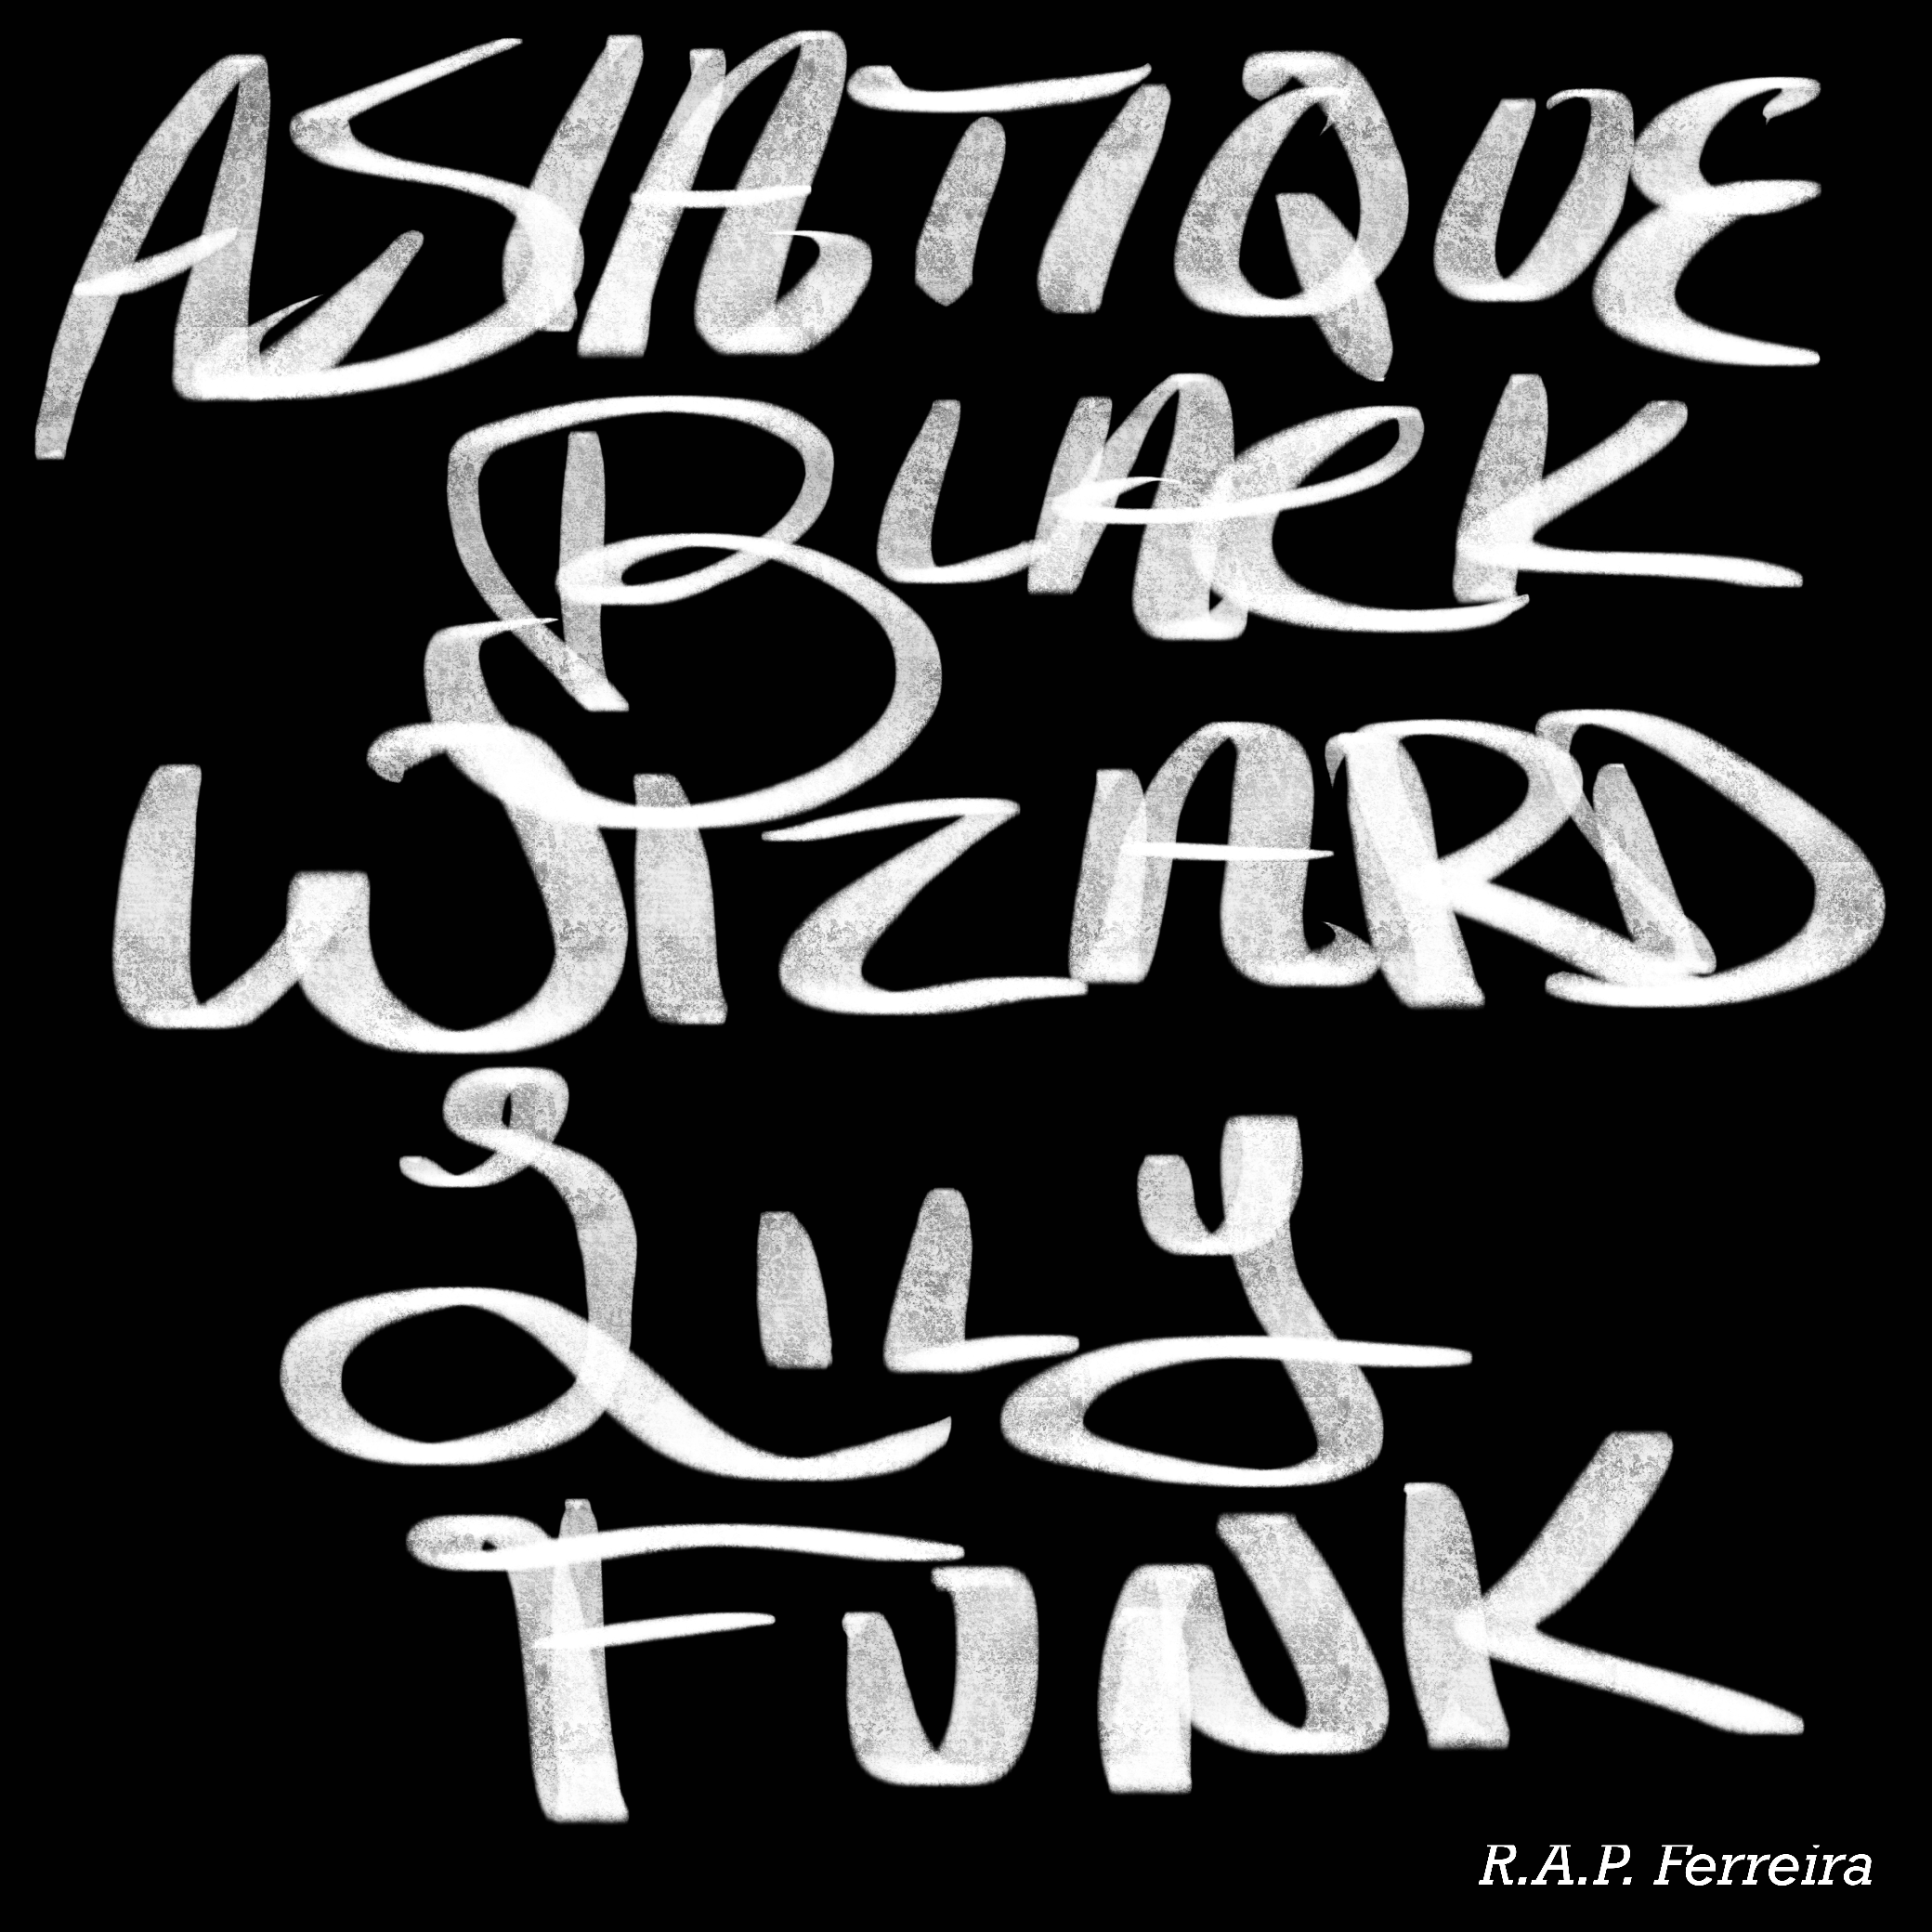 R.A.P. Ferreira - ASIATIQUE BLACK WIZARD LILY FUNK EP